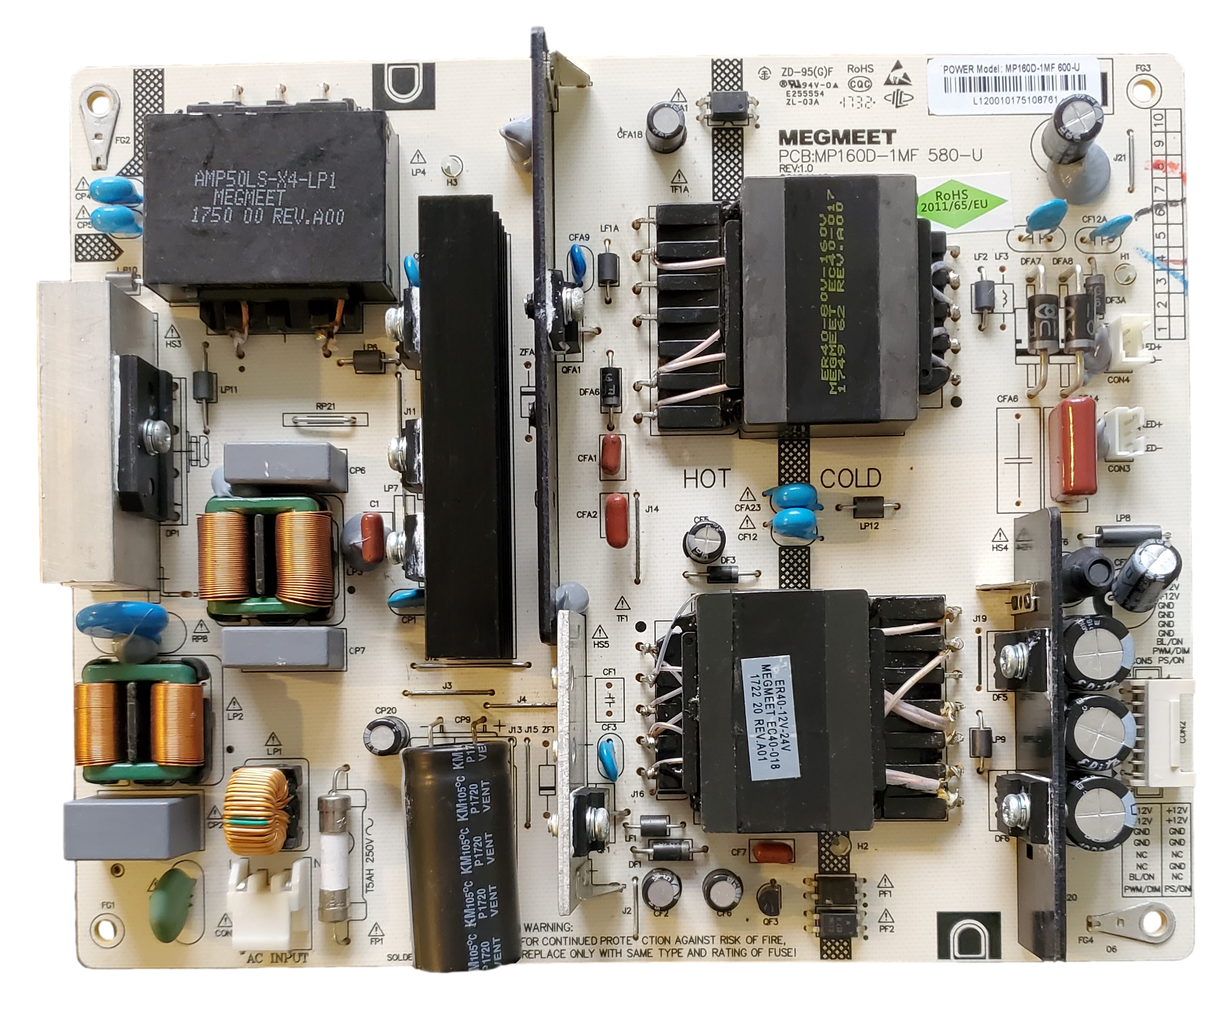 MP160D-1MF, Element Power Supply Board, MP160D-1MF 580-U, E4SW5017RKU